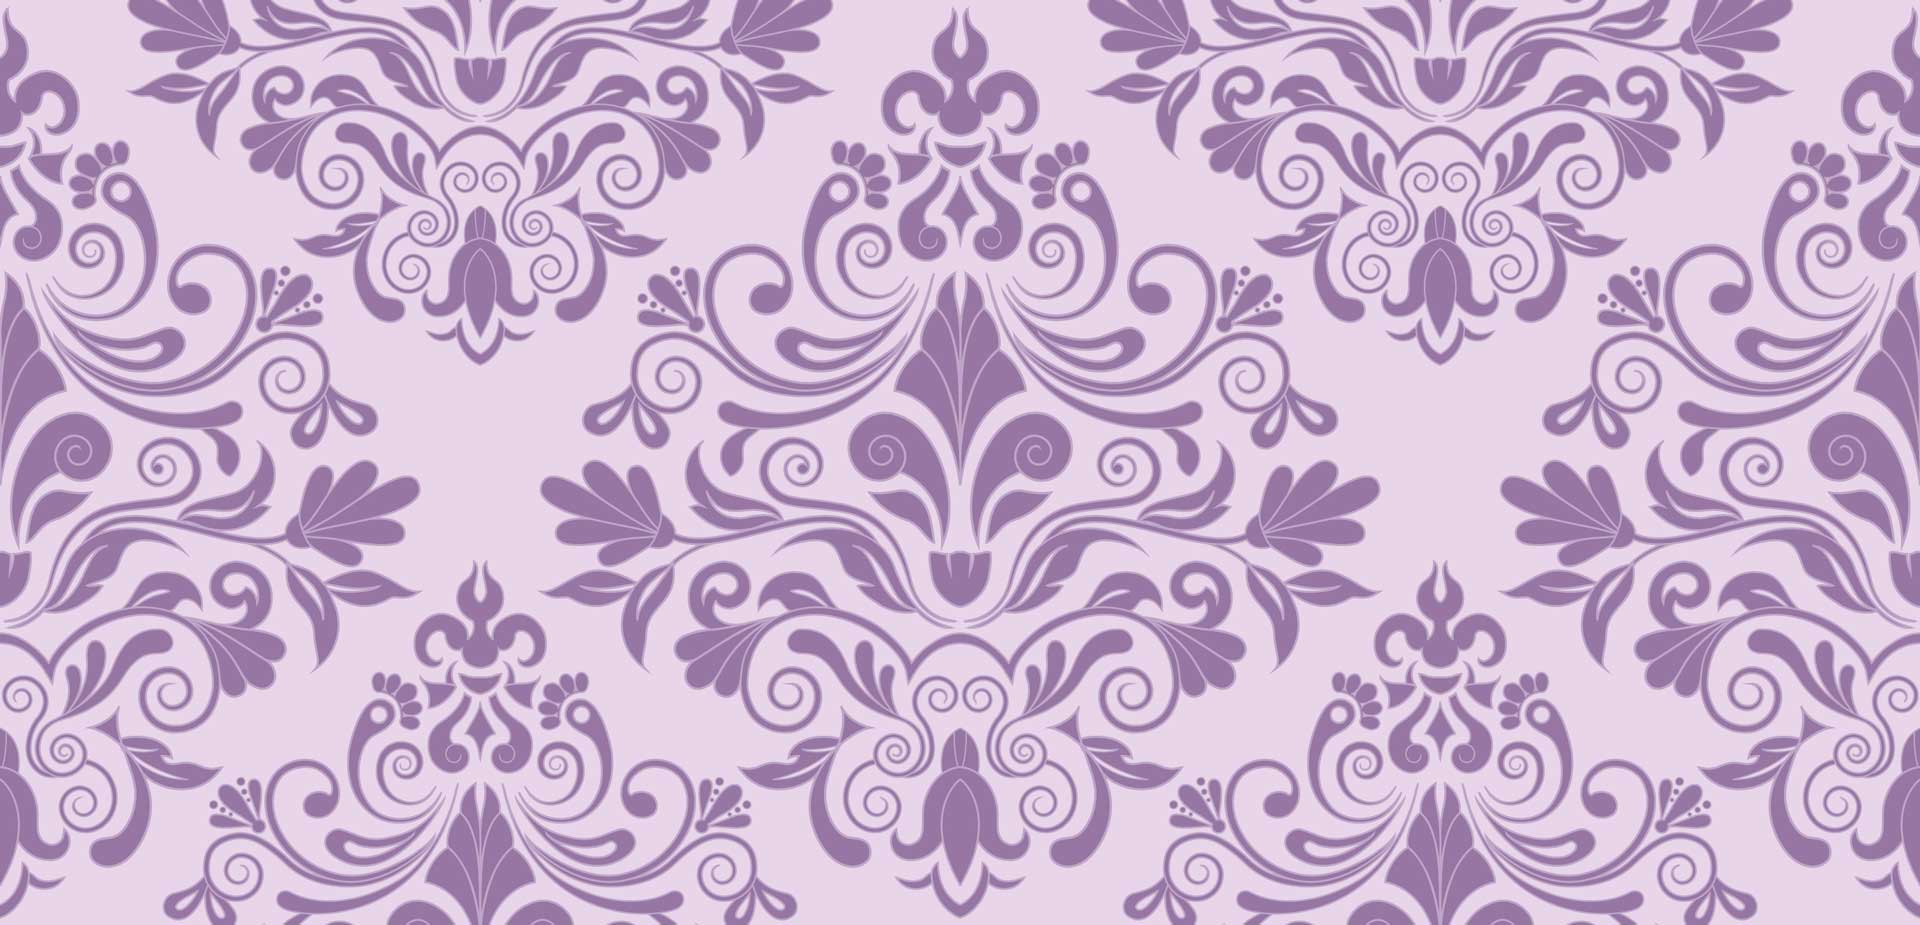 a purple damask pattern on a pink background